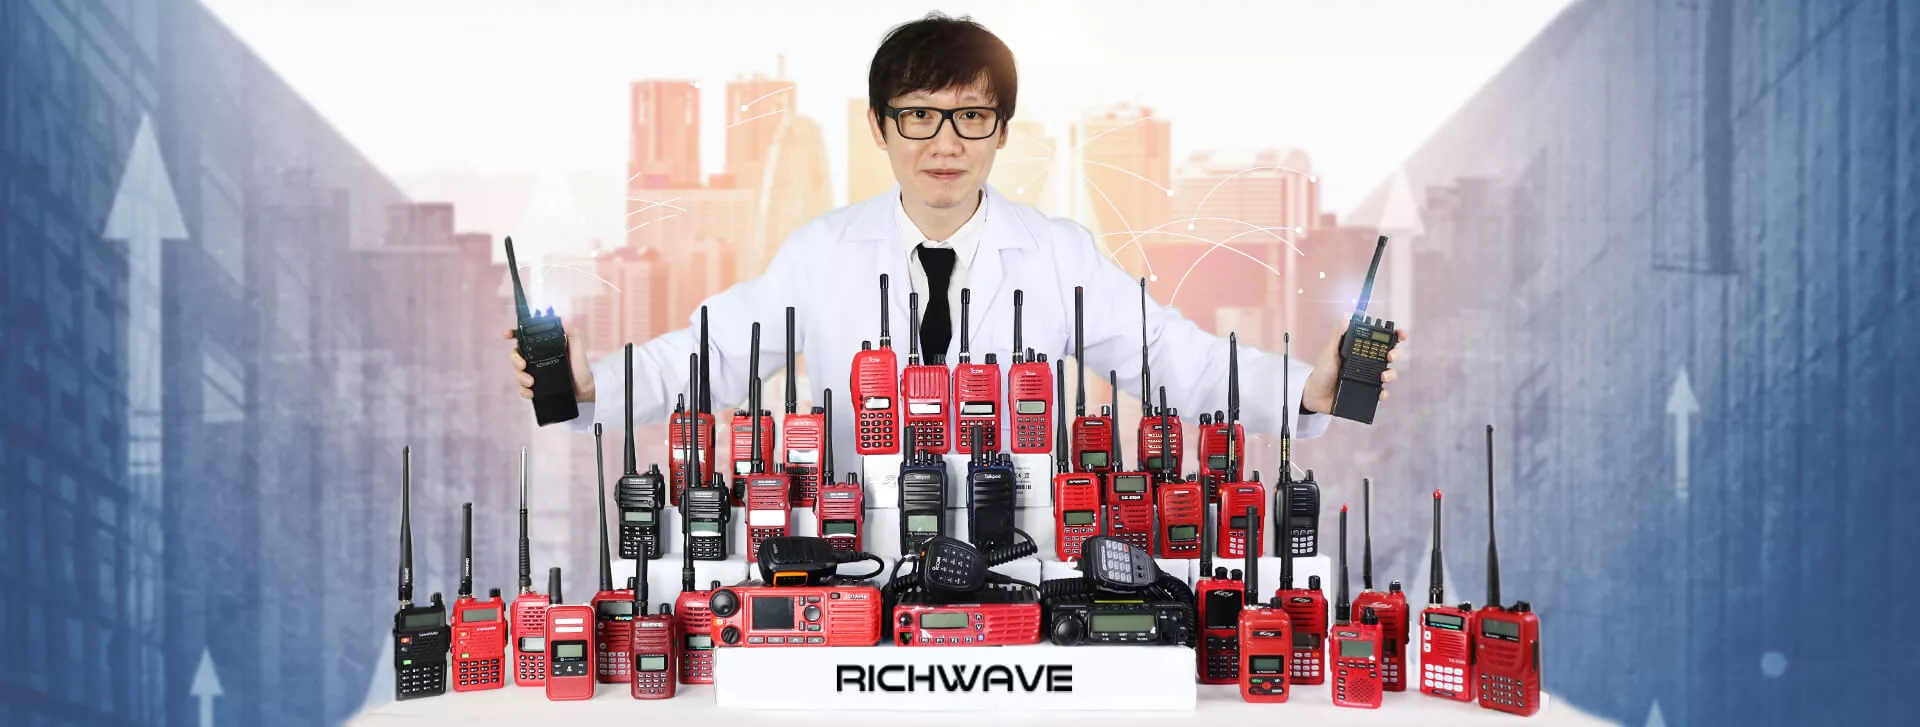 Richwave ผู้จัดจำหน่าย วิทยุสื่อสาร